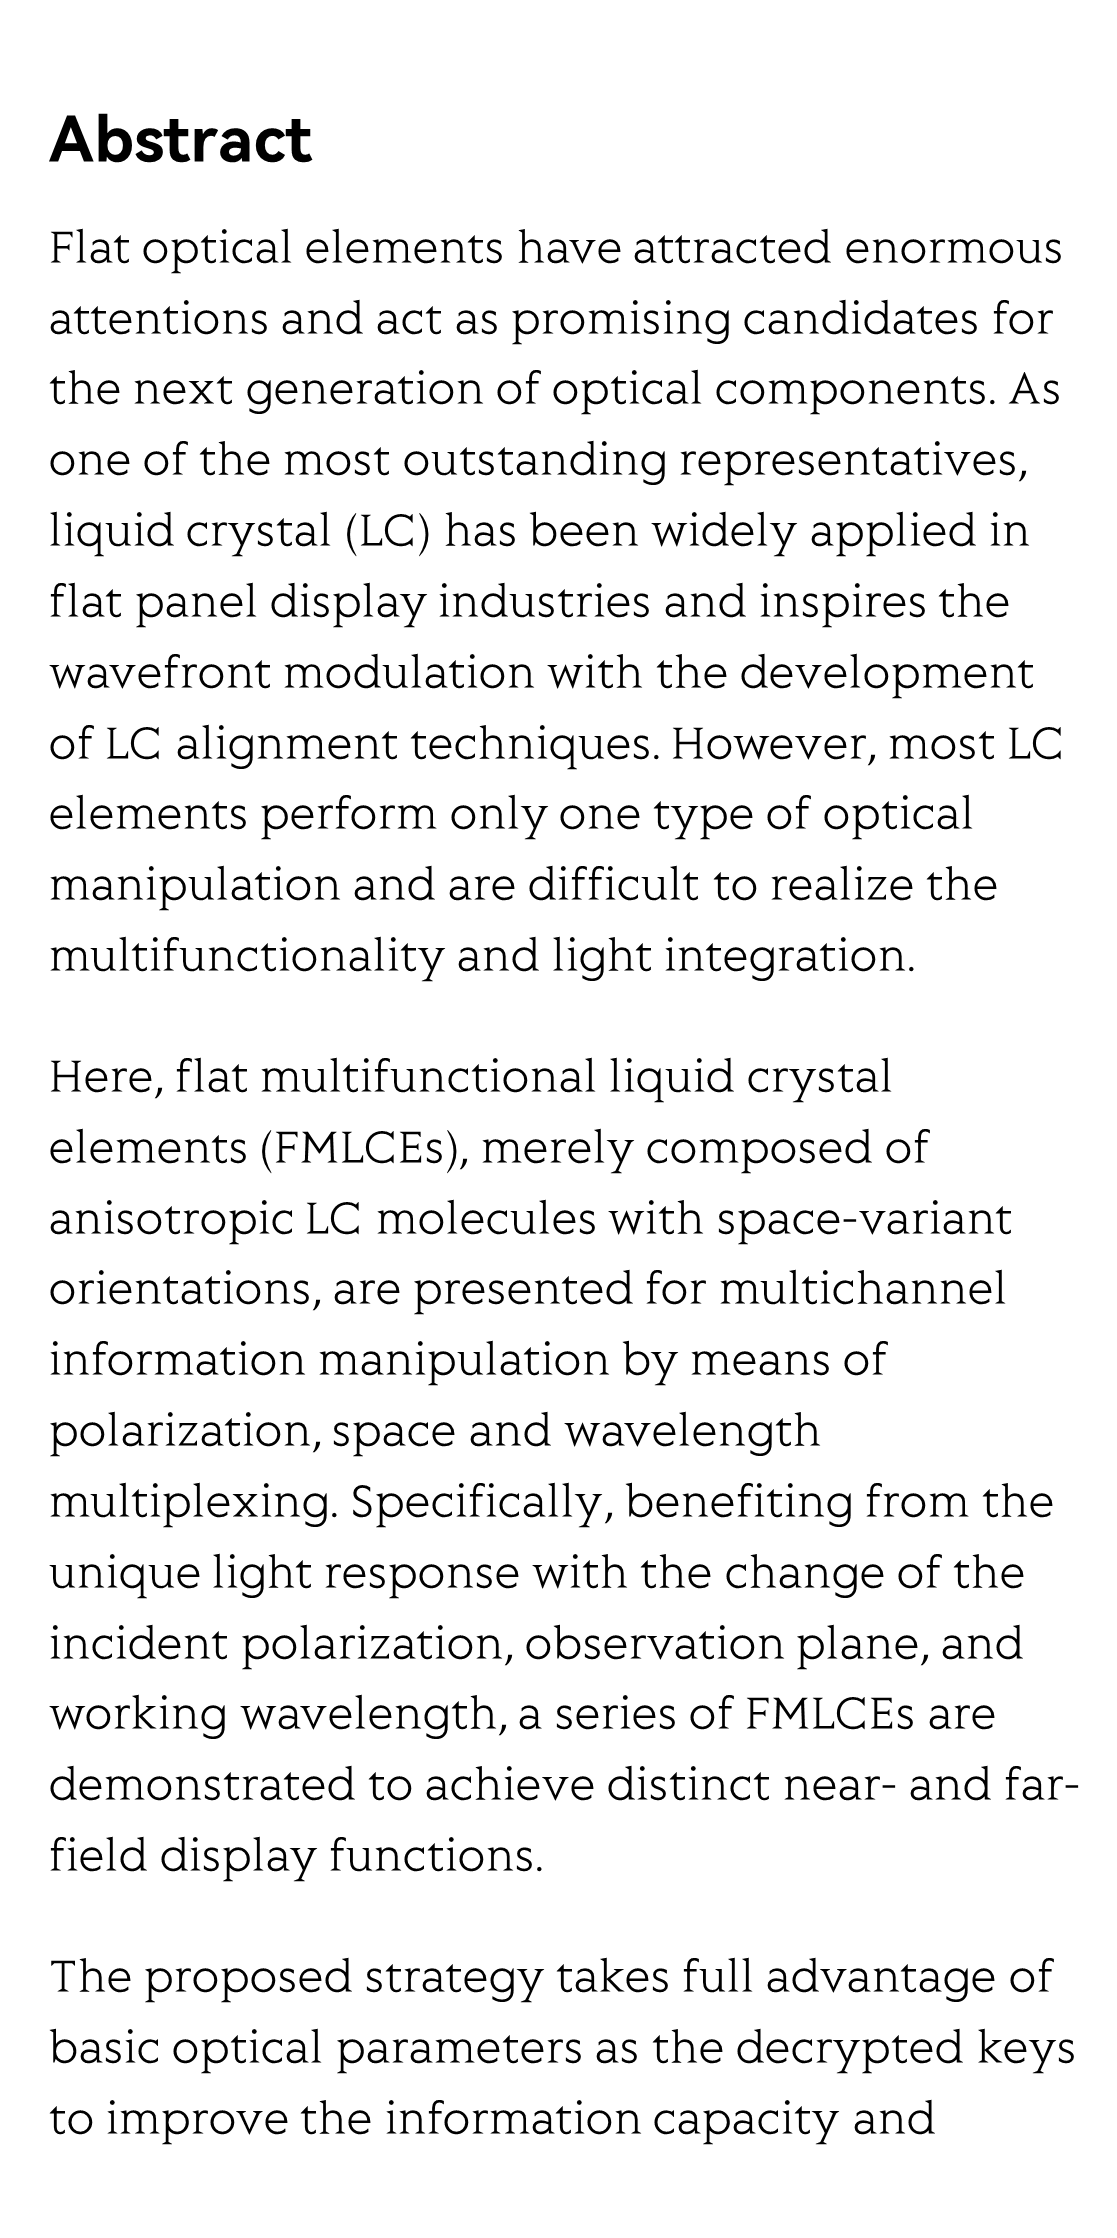 Flat multifunctional liquid crystal elements through multi-dimensional information multiplexing_2